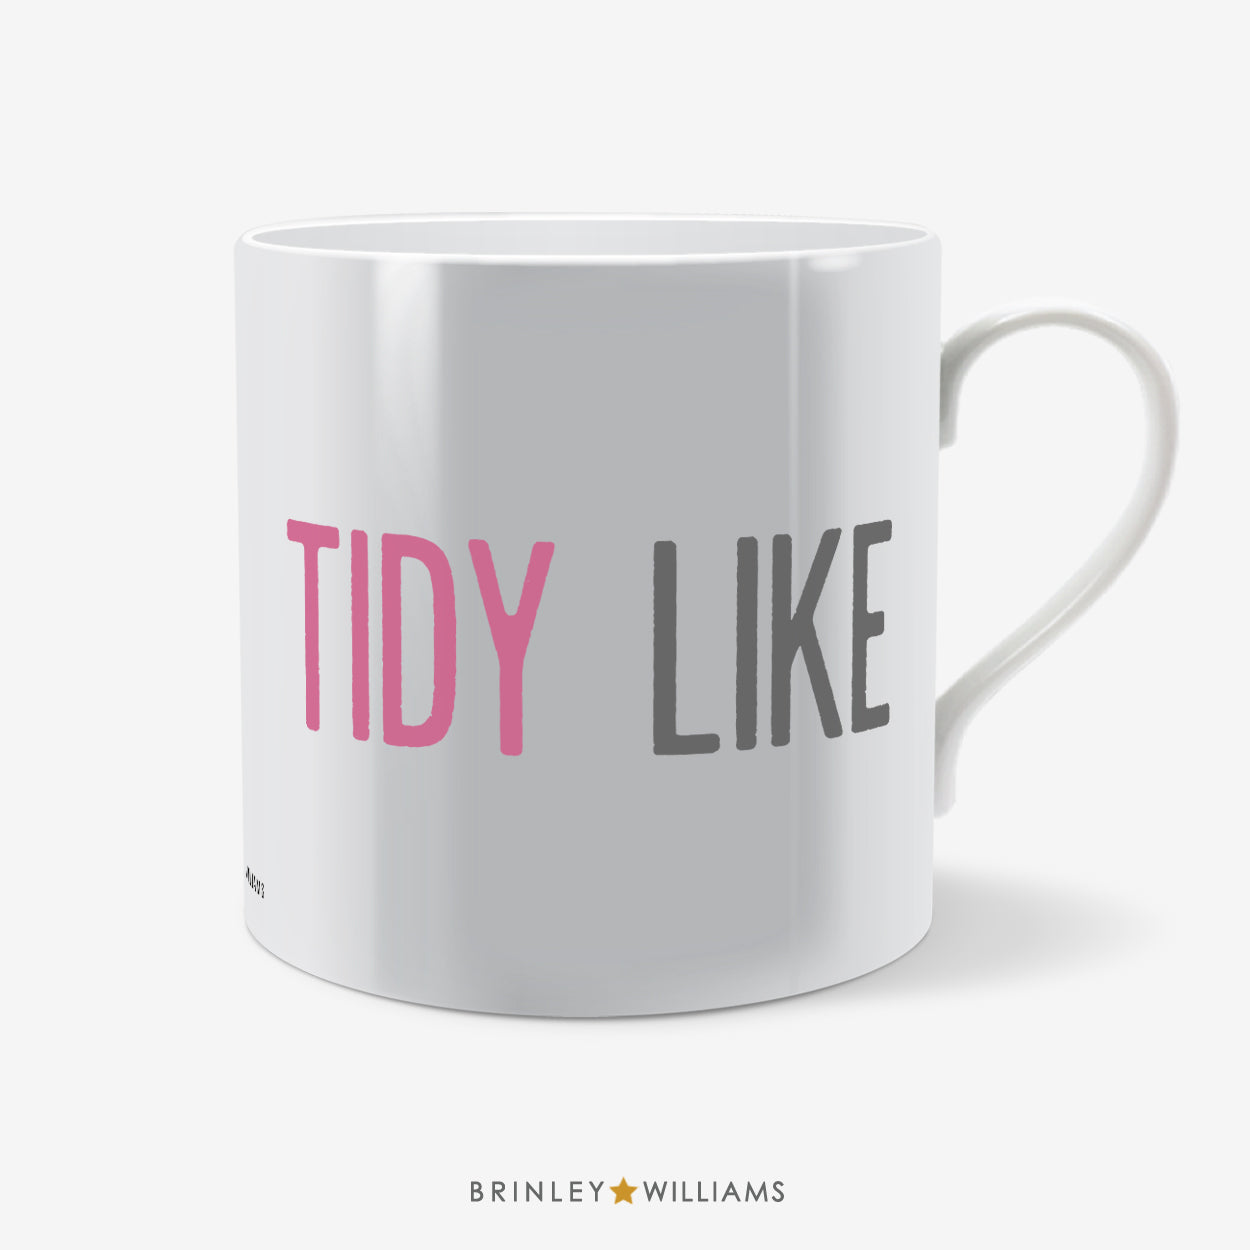 Tidy Like Welsh Mug - Pink